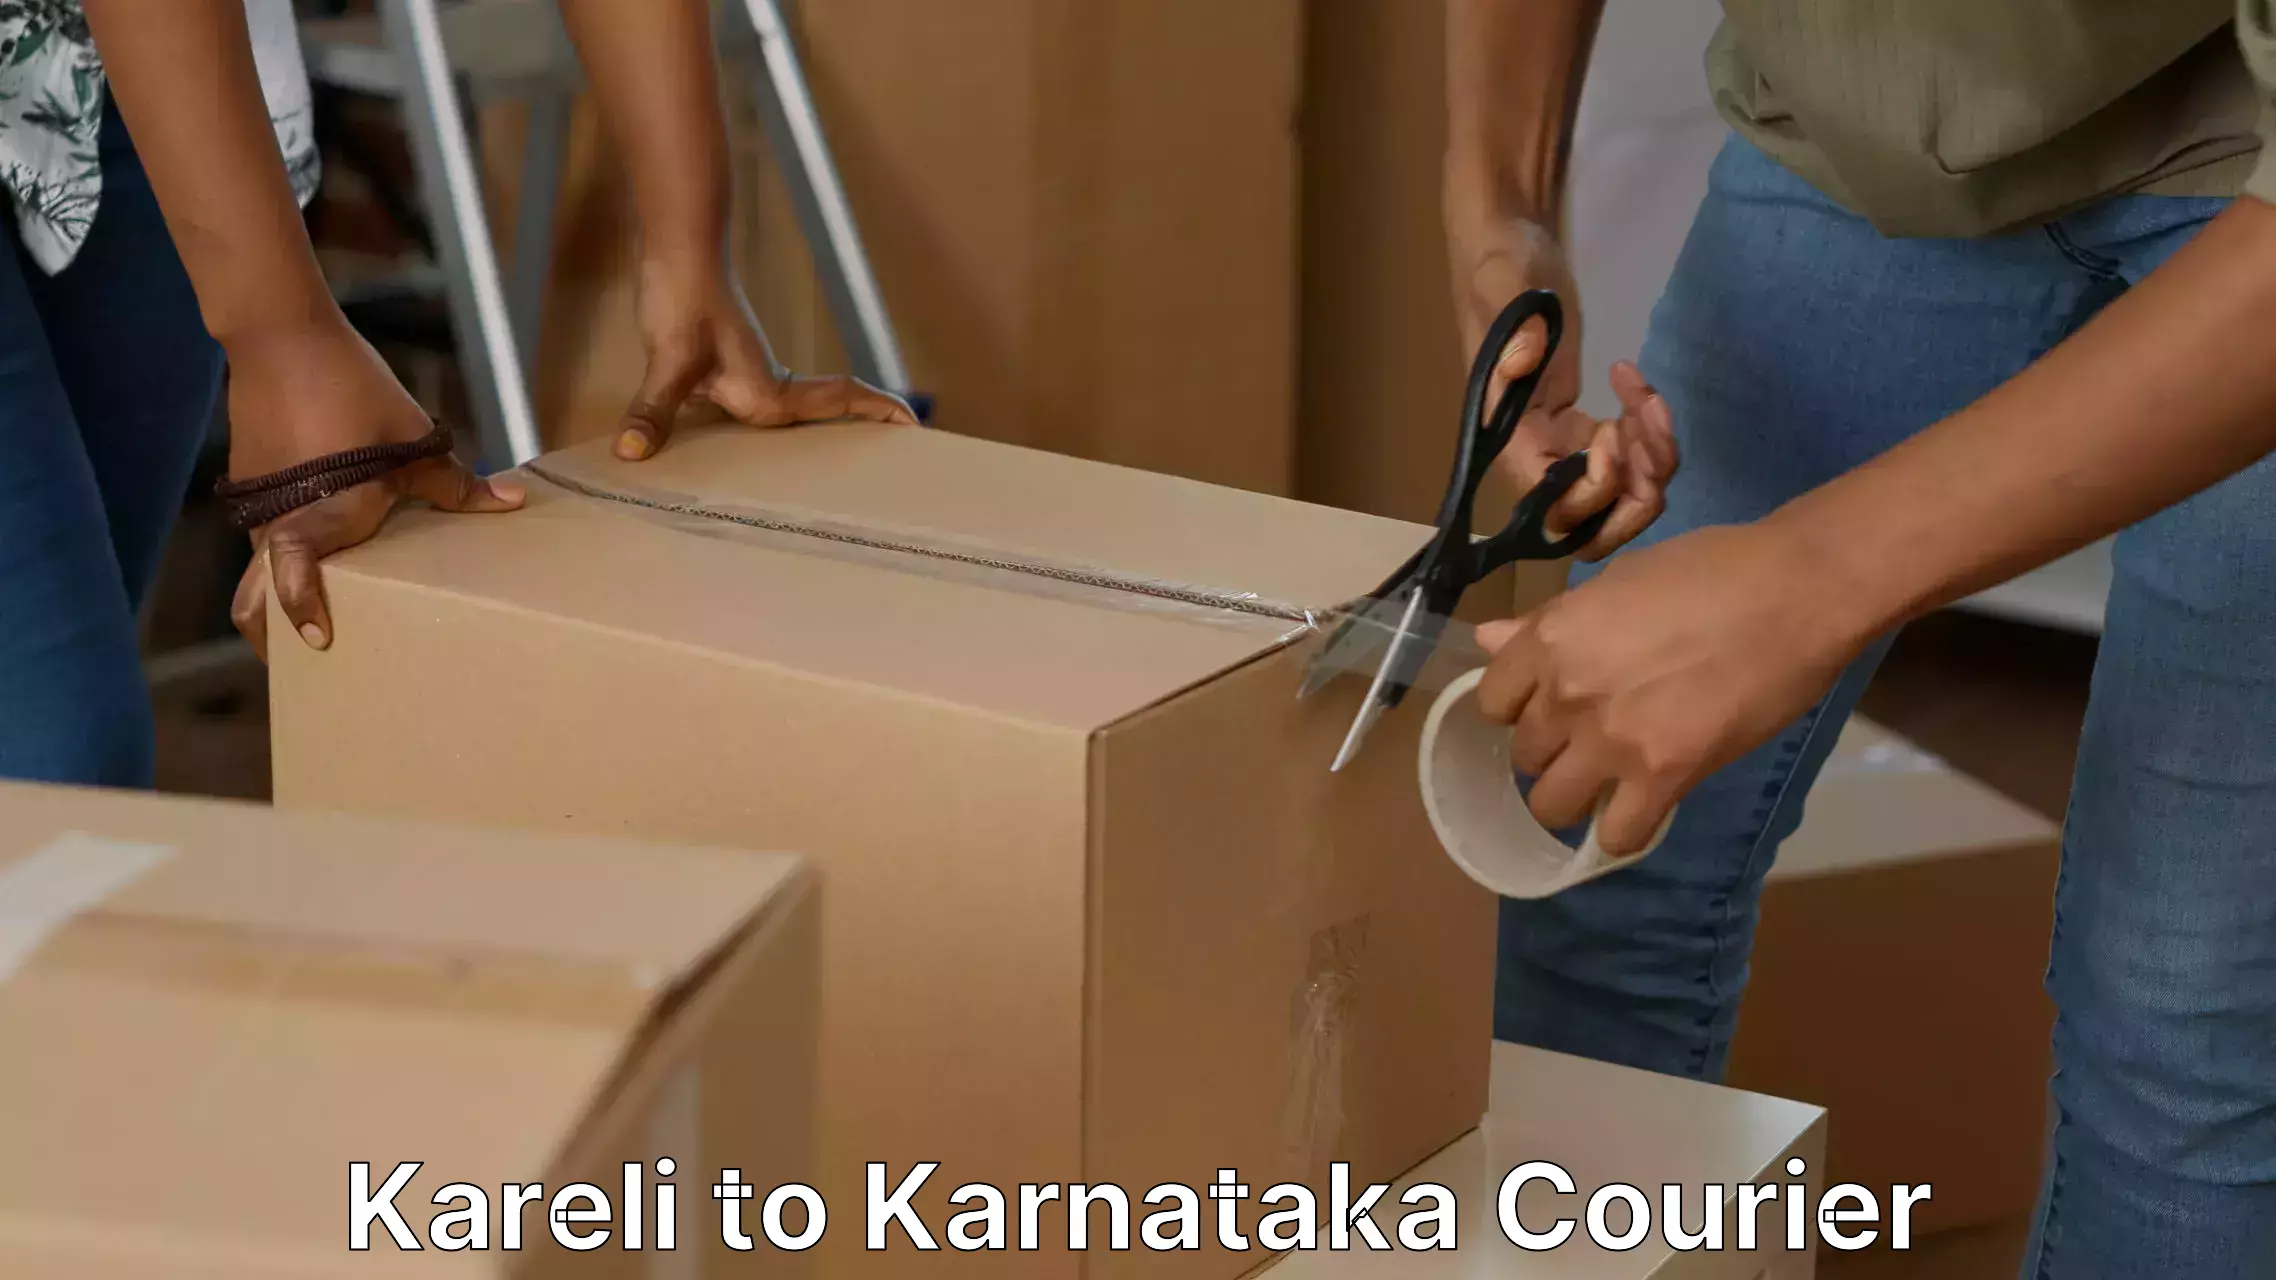 Household goods transport service Kareli to Karnataka